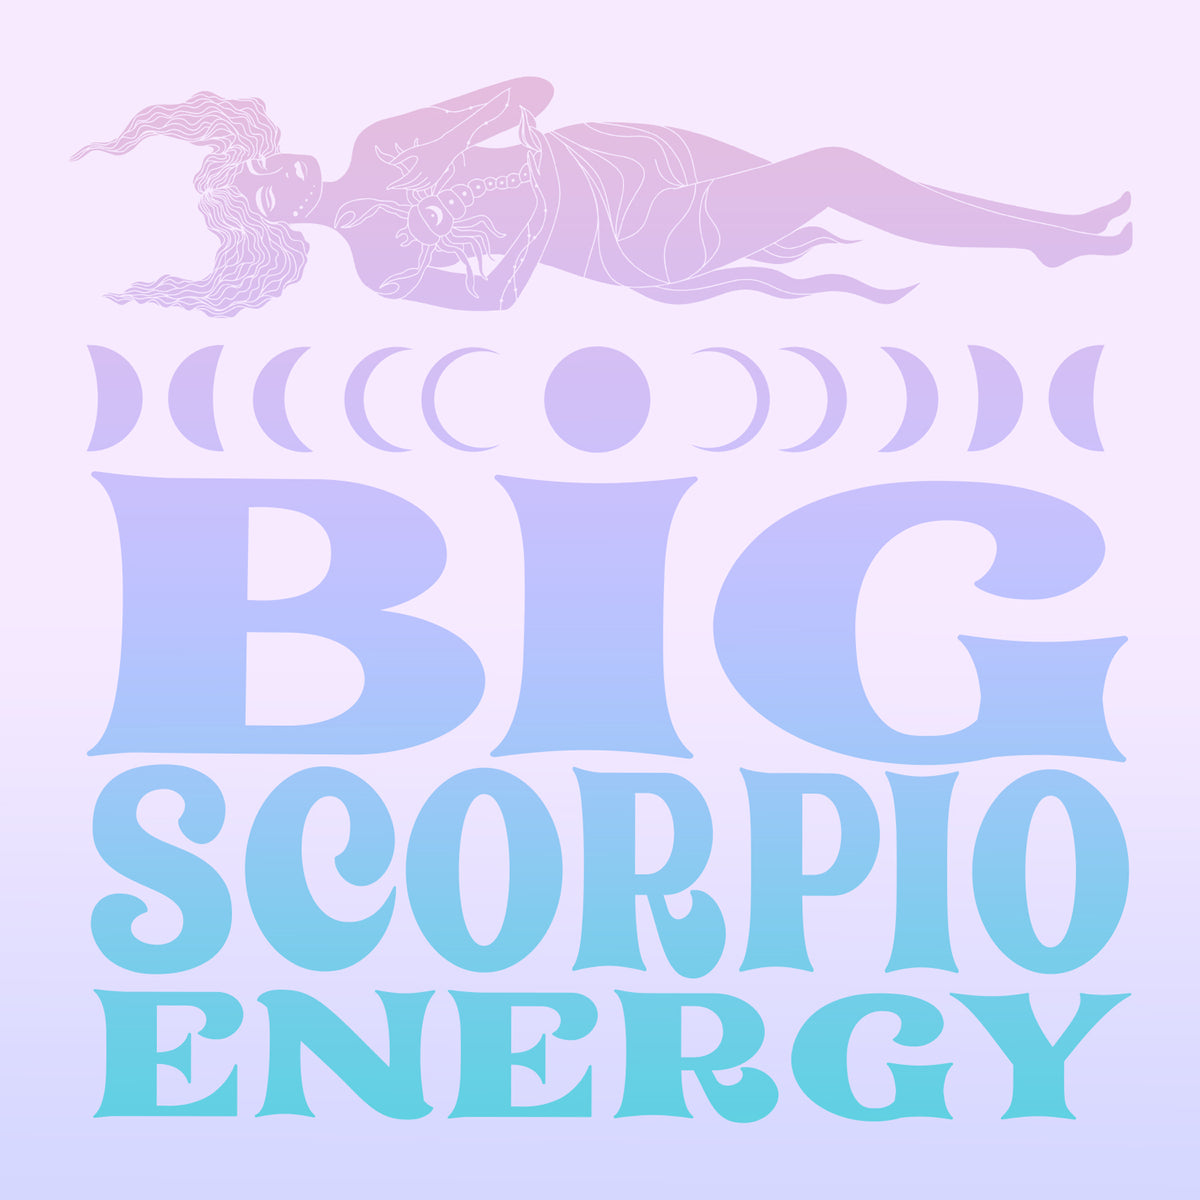 Big Scorpio Energy Zodiac Gift Box Set